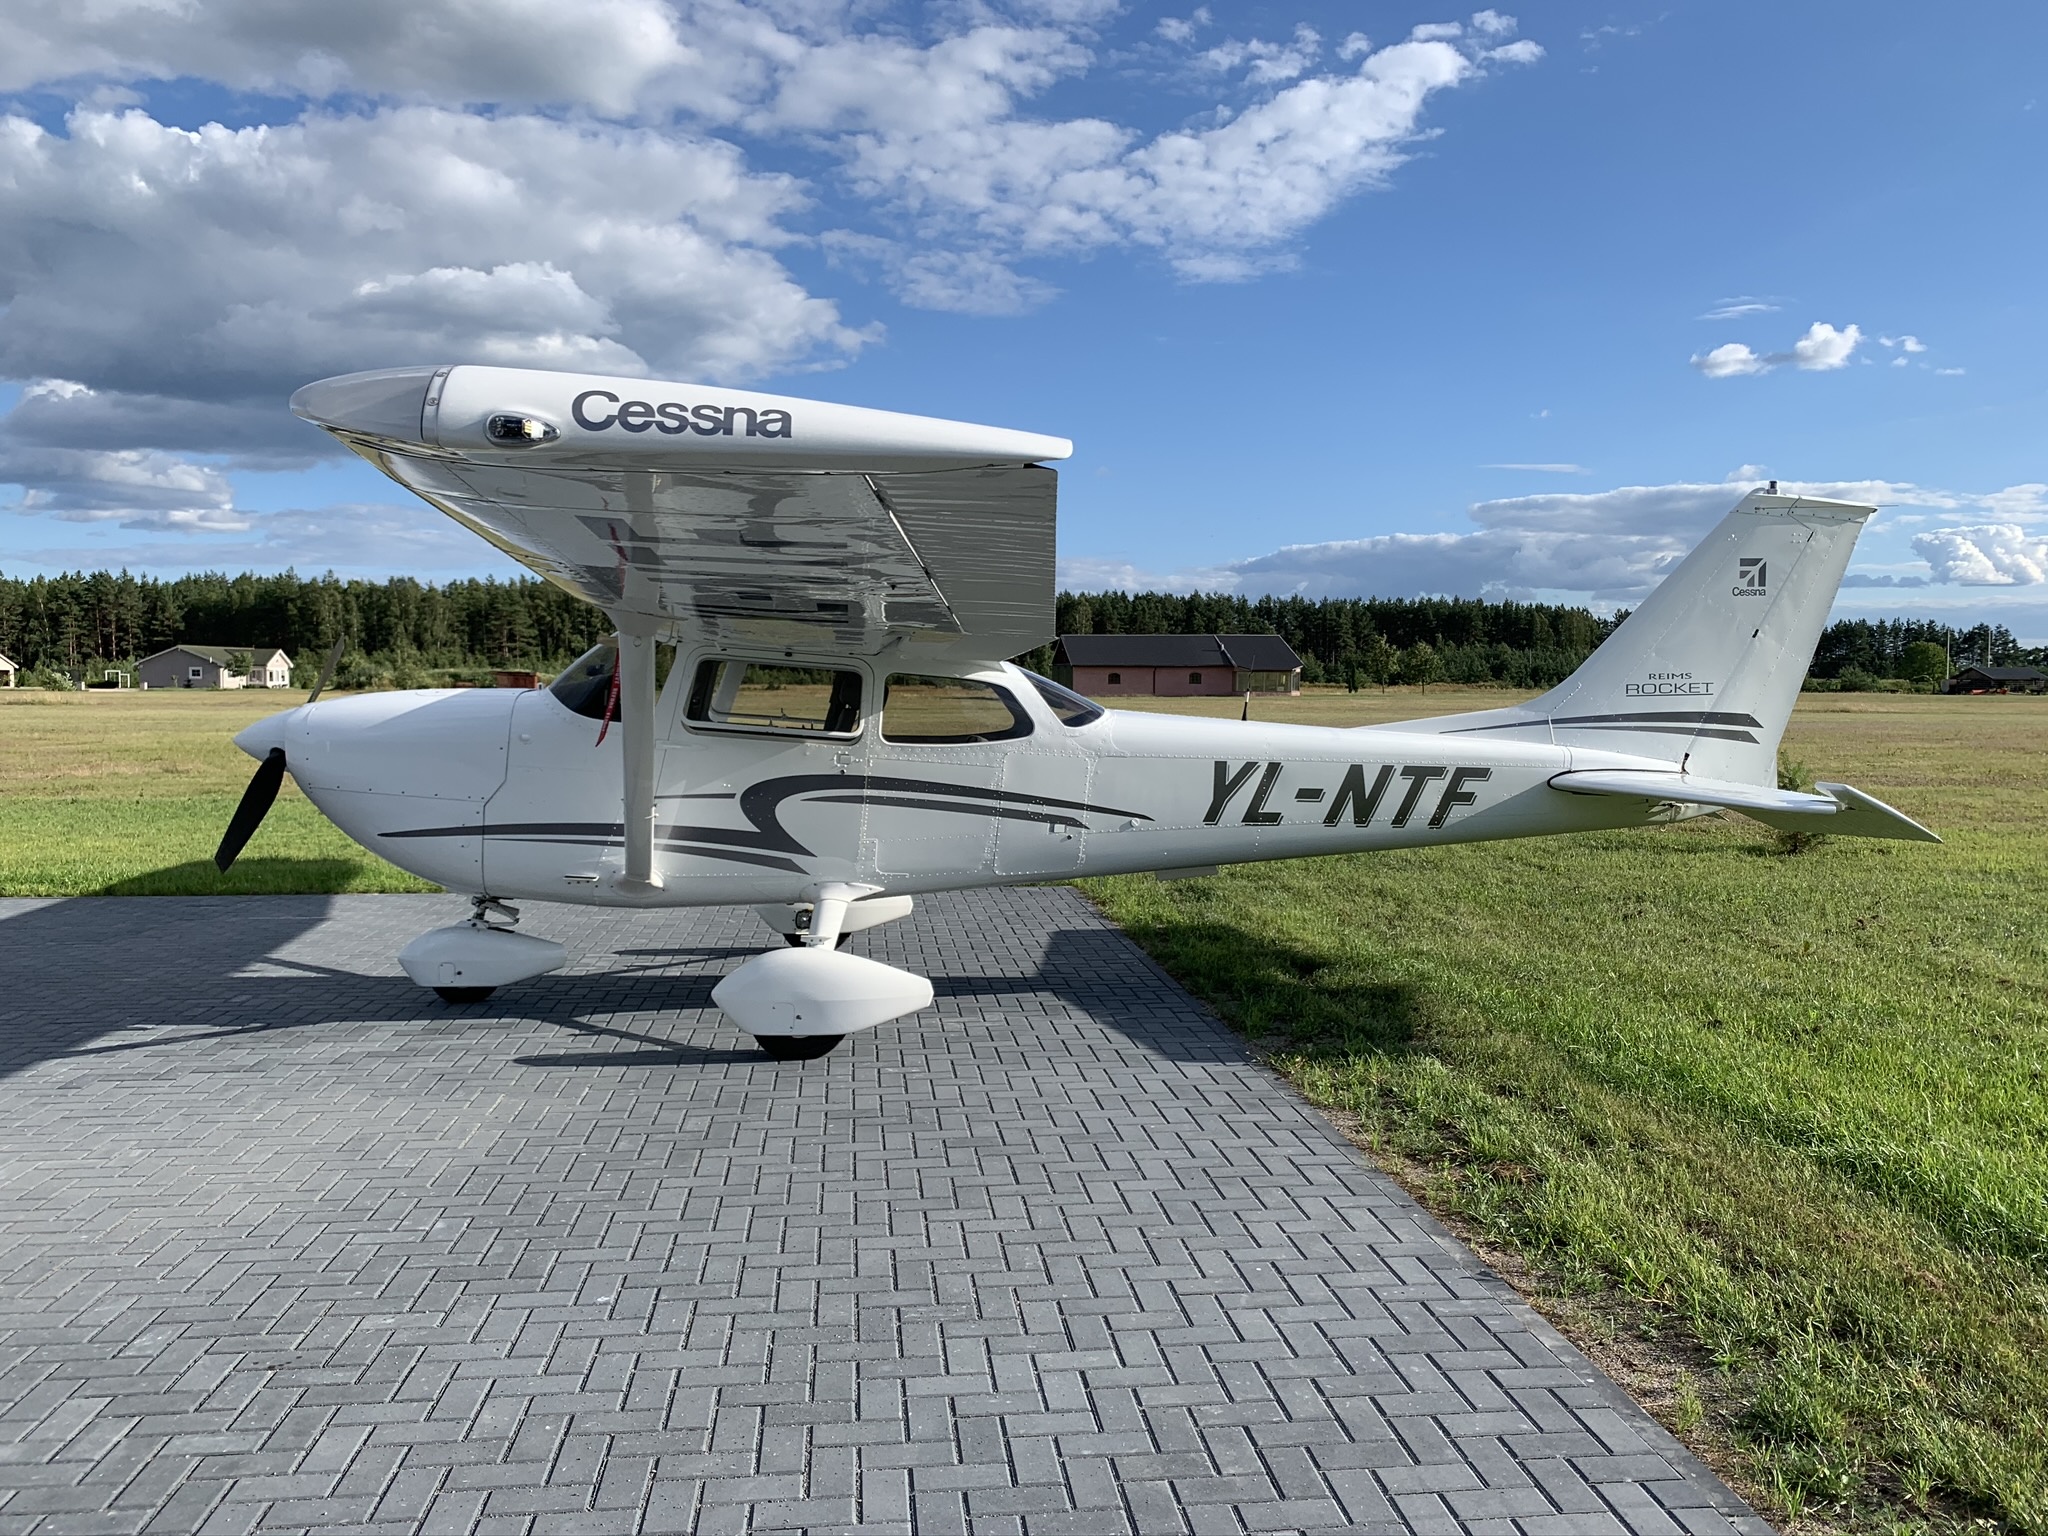 Reims-Cessna travels, U2flylt aircraft, European adventures, Aviation experiences, 2050x1540 HD Desktop